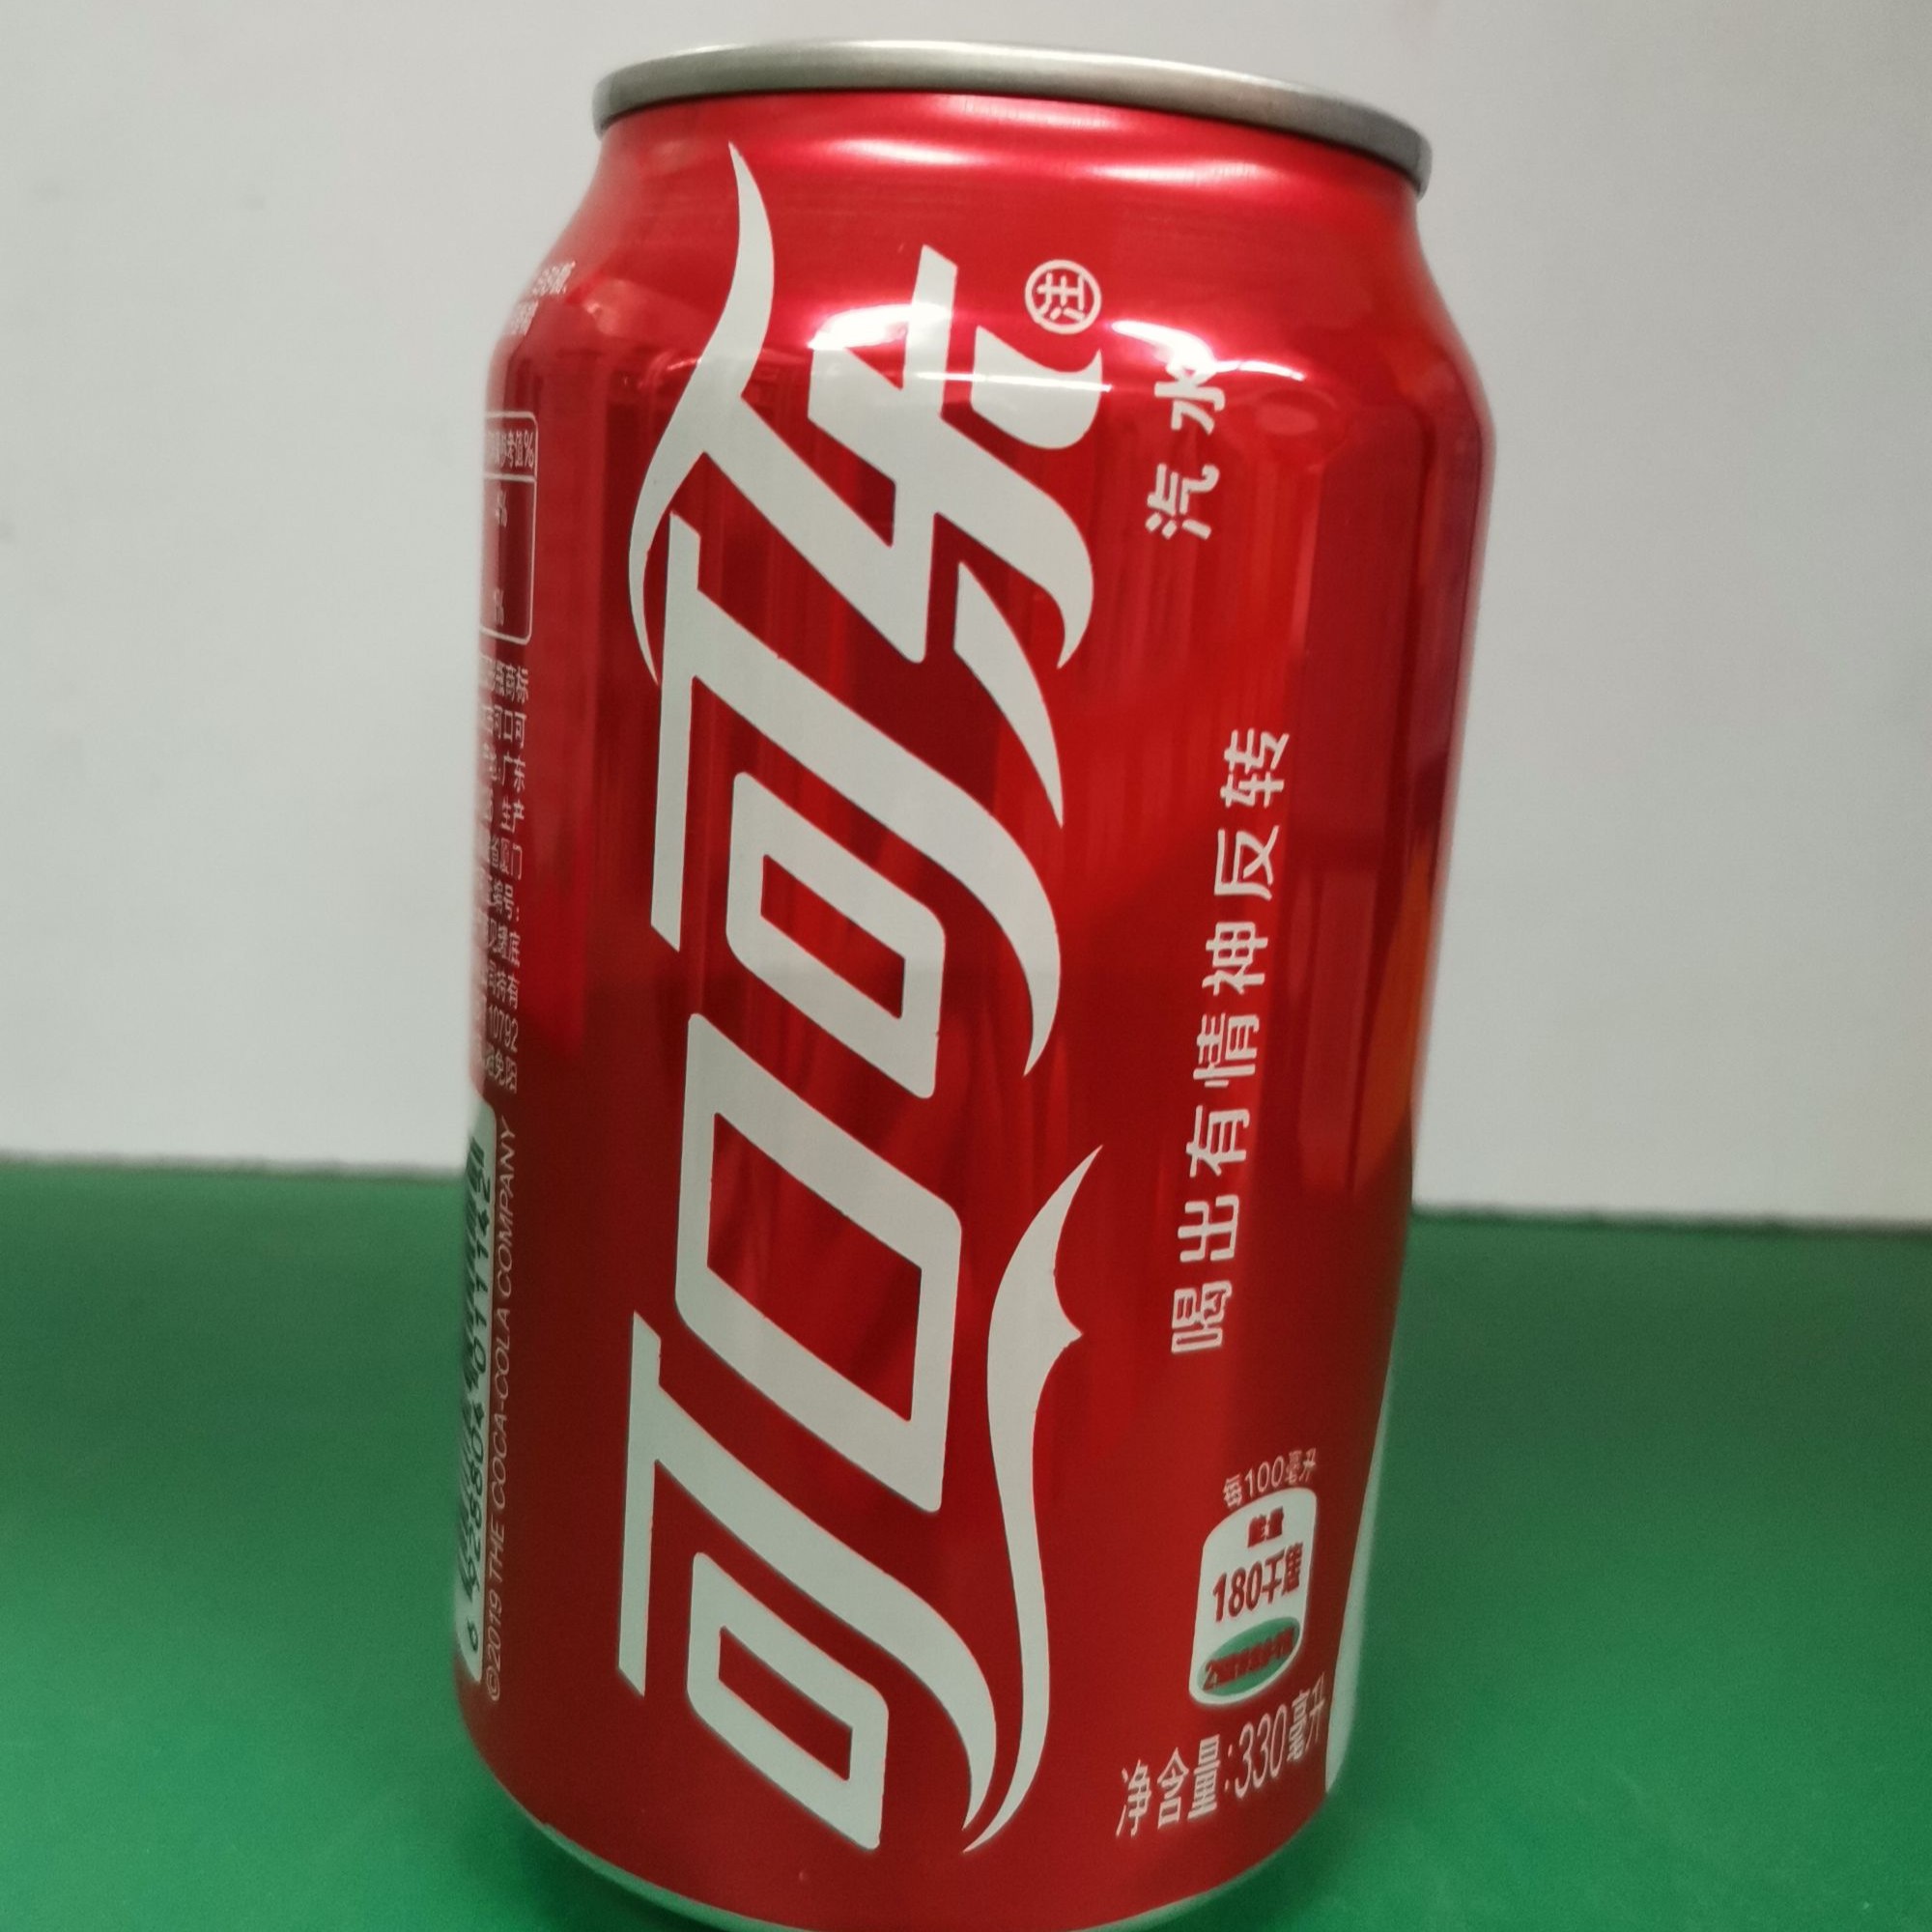 330ml罐可口可乐 详情 好源生活超市 进店逛逛  价格 2.